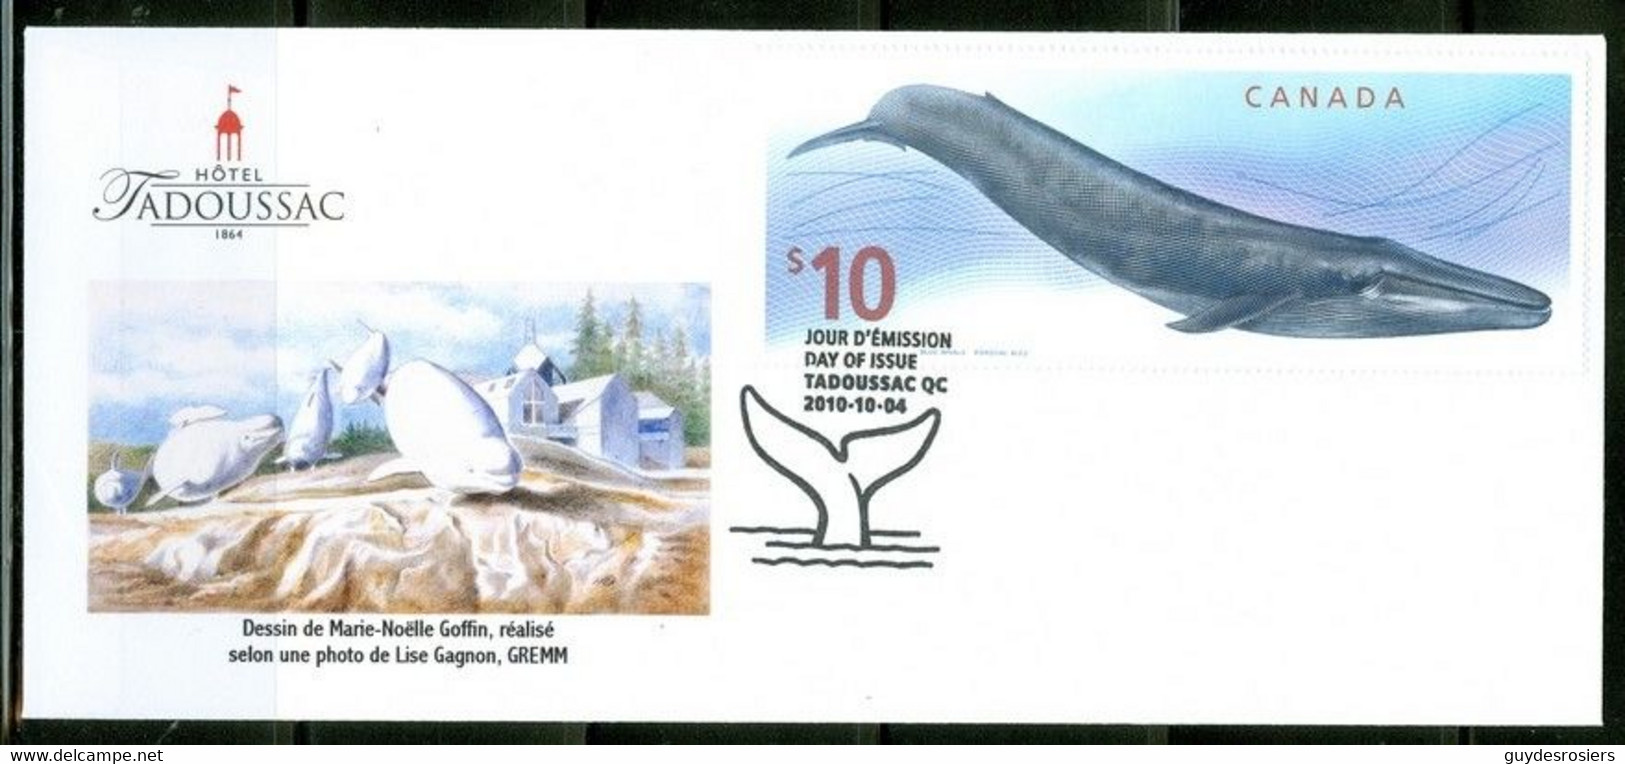 Baleine / Whale; Marie-N. Goffin; Hôtel Tadoussac; Timbre Scott # 2405 Stamp; PPJ / FDC (0338) - Briefe U. Dokumente